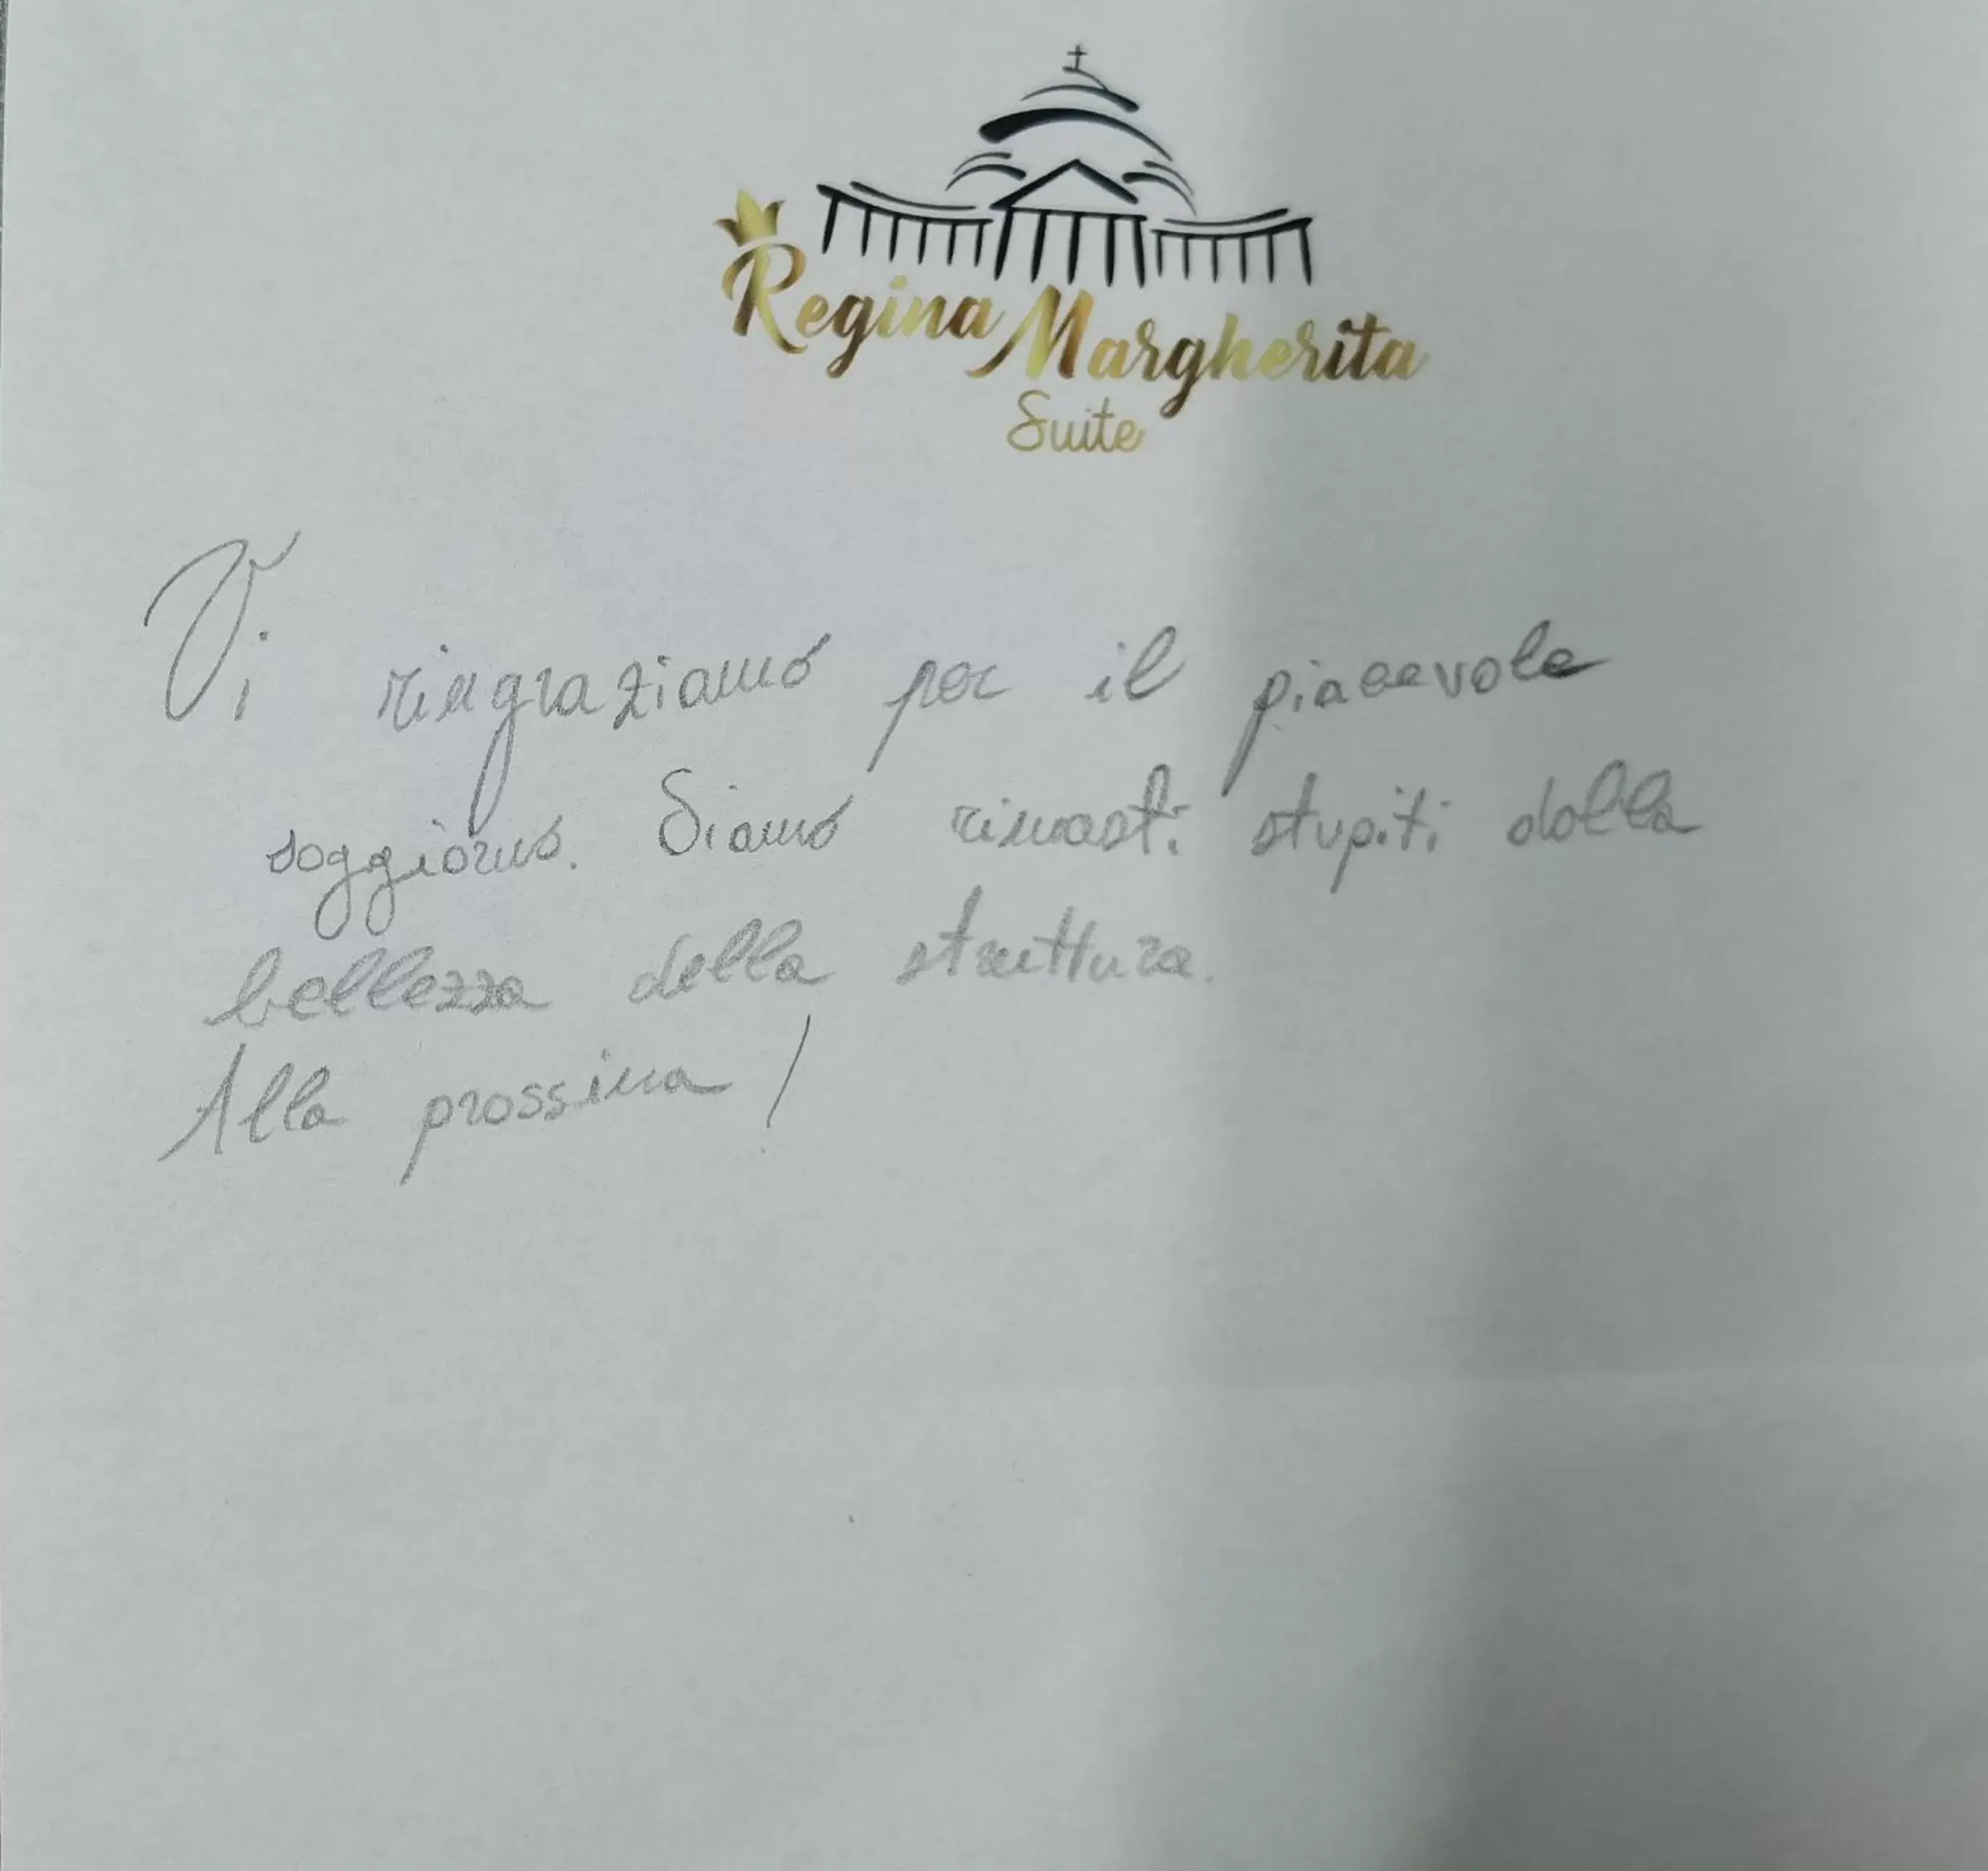 Certificate/Award in Regina Margherita Suite